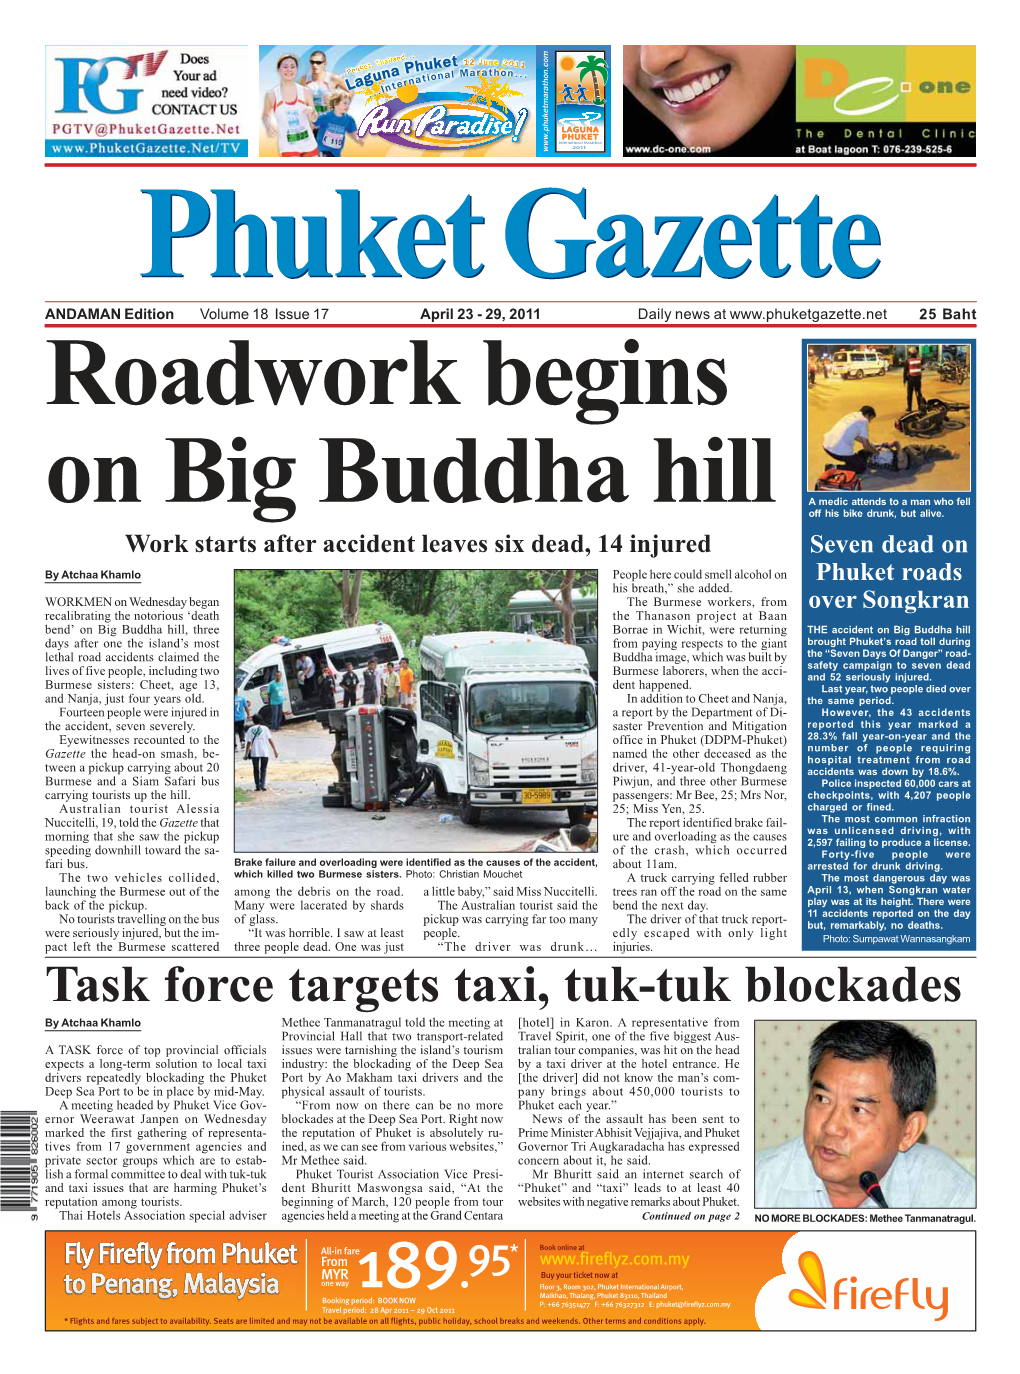 Roadwork Begins on Big Buddha Hill